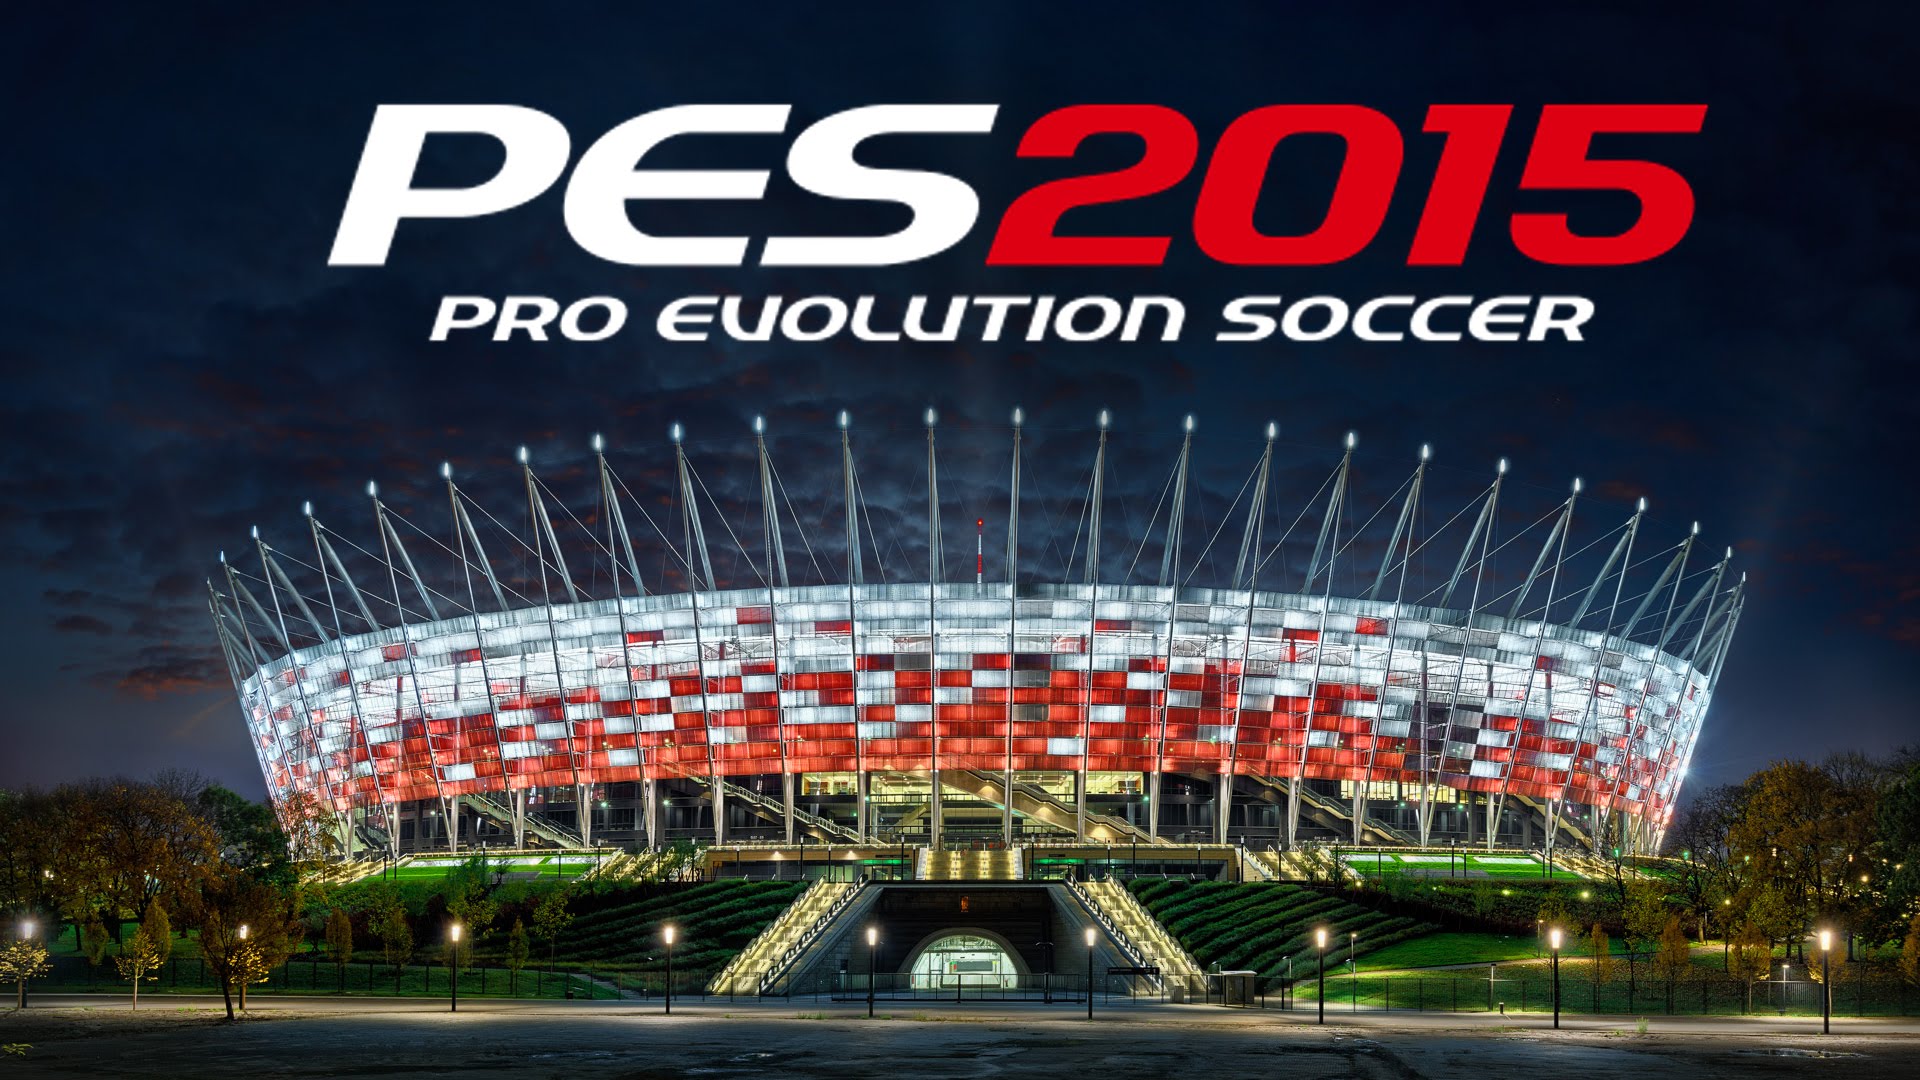 2015. Pro Evolution Soccer 2015 обложка. Пес 2015. Pro Evolution Soccer 2015 Cover. Pro Evolution Soccer Wallpaper.